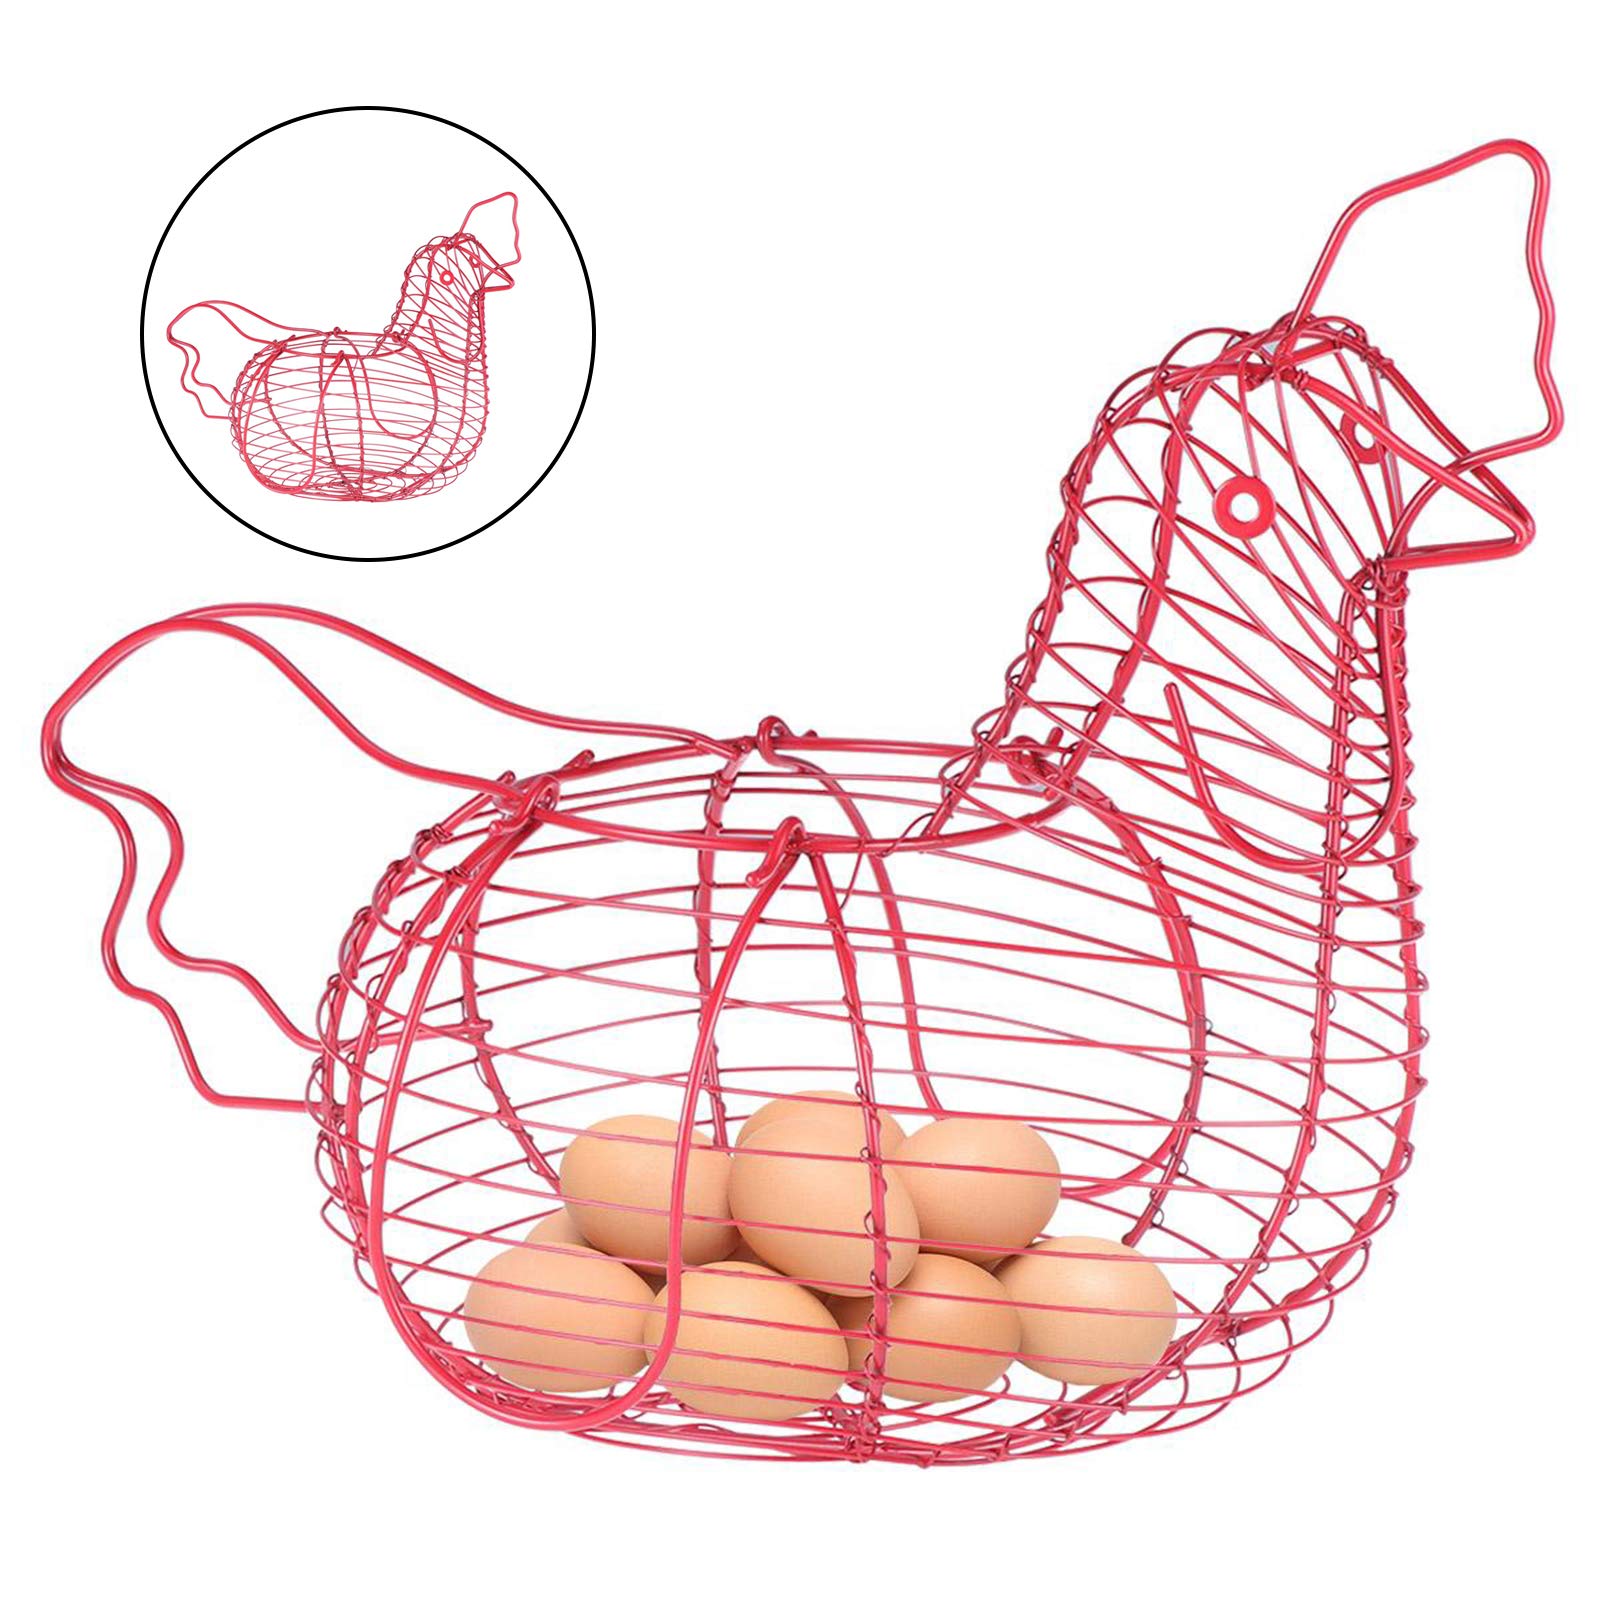 MERIGLARE Rustic Storage Basket Metal Wire Hen Shaped Snack Fruit Egg Basket Pink Wire Holder with Handles for Kitchen